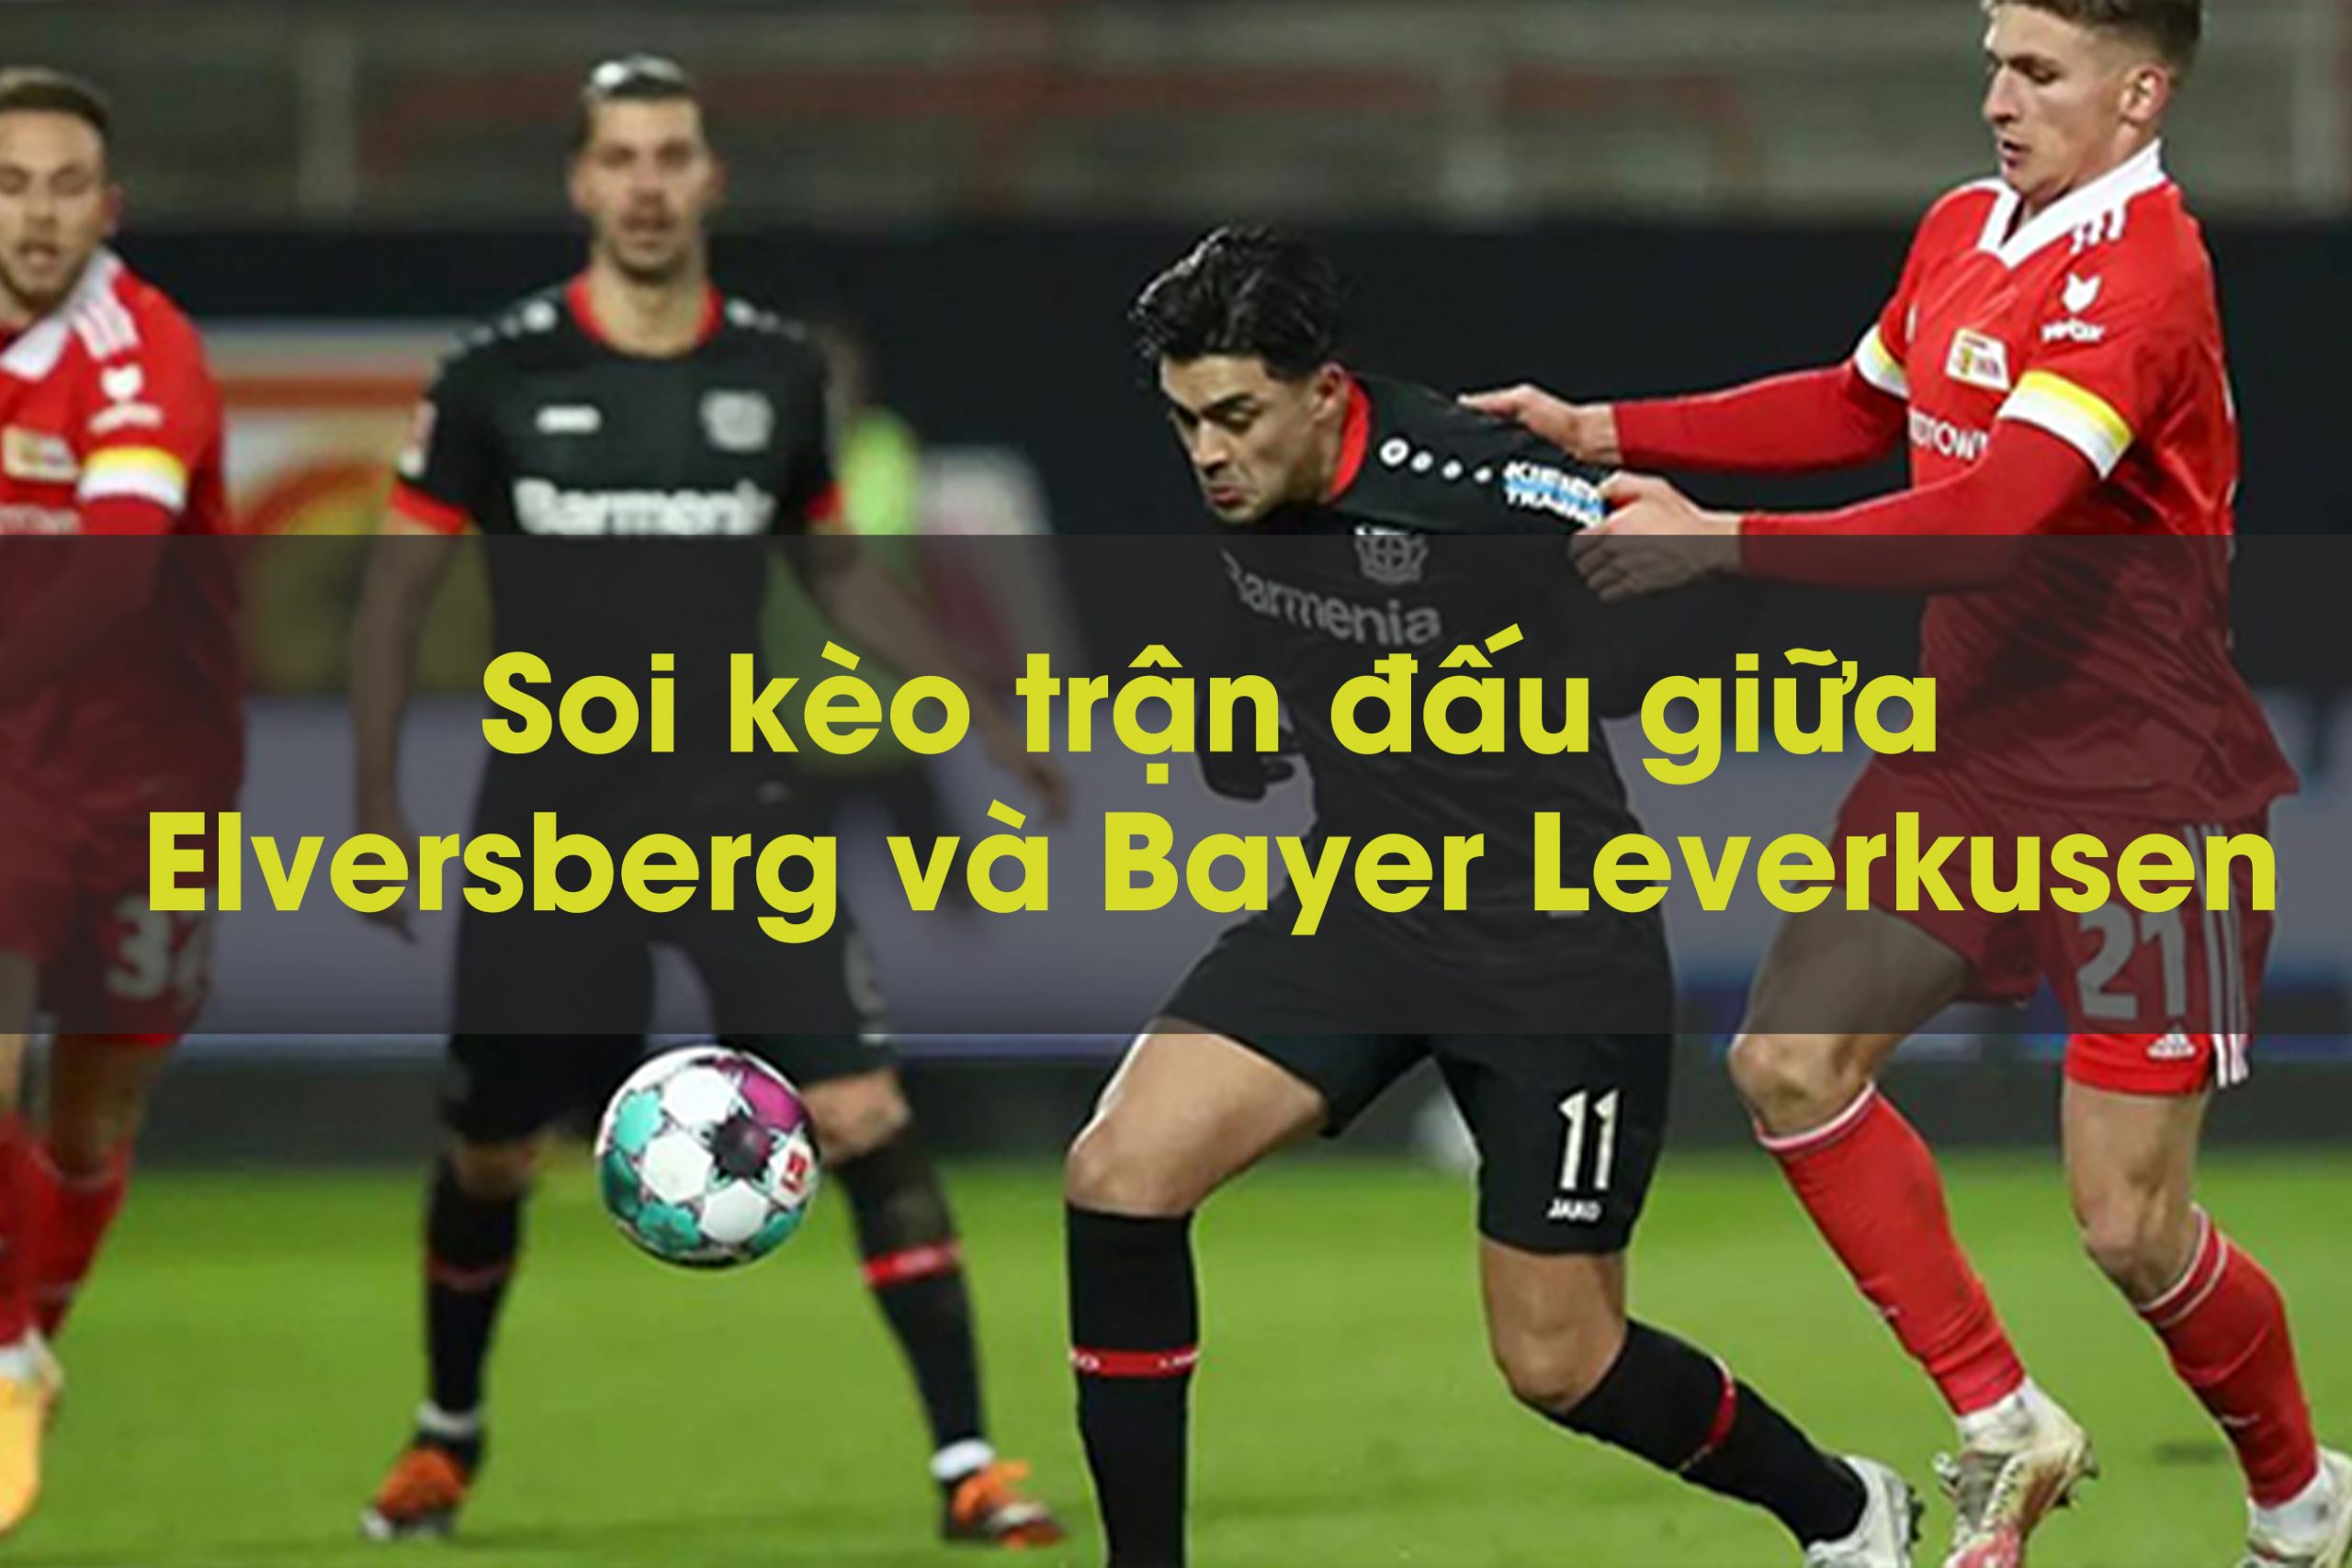 Soi kèo trận đấu giữa Elversberg và Bayer Leverkusen 01